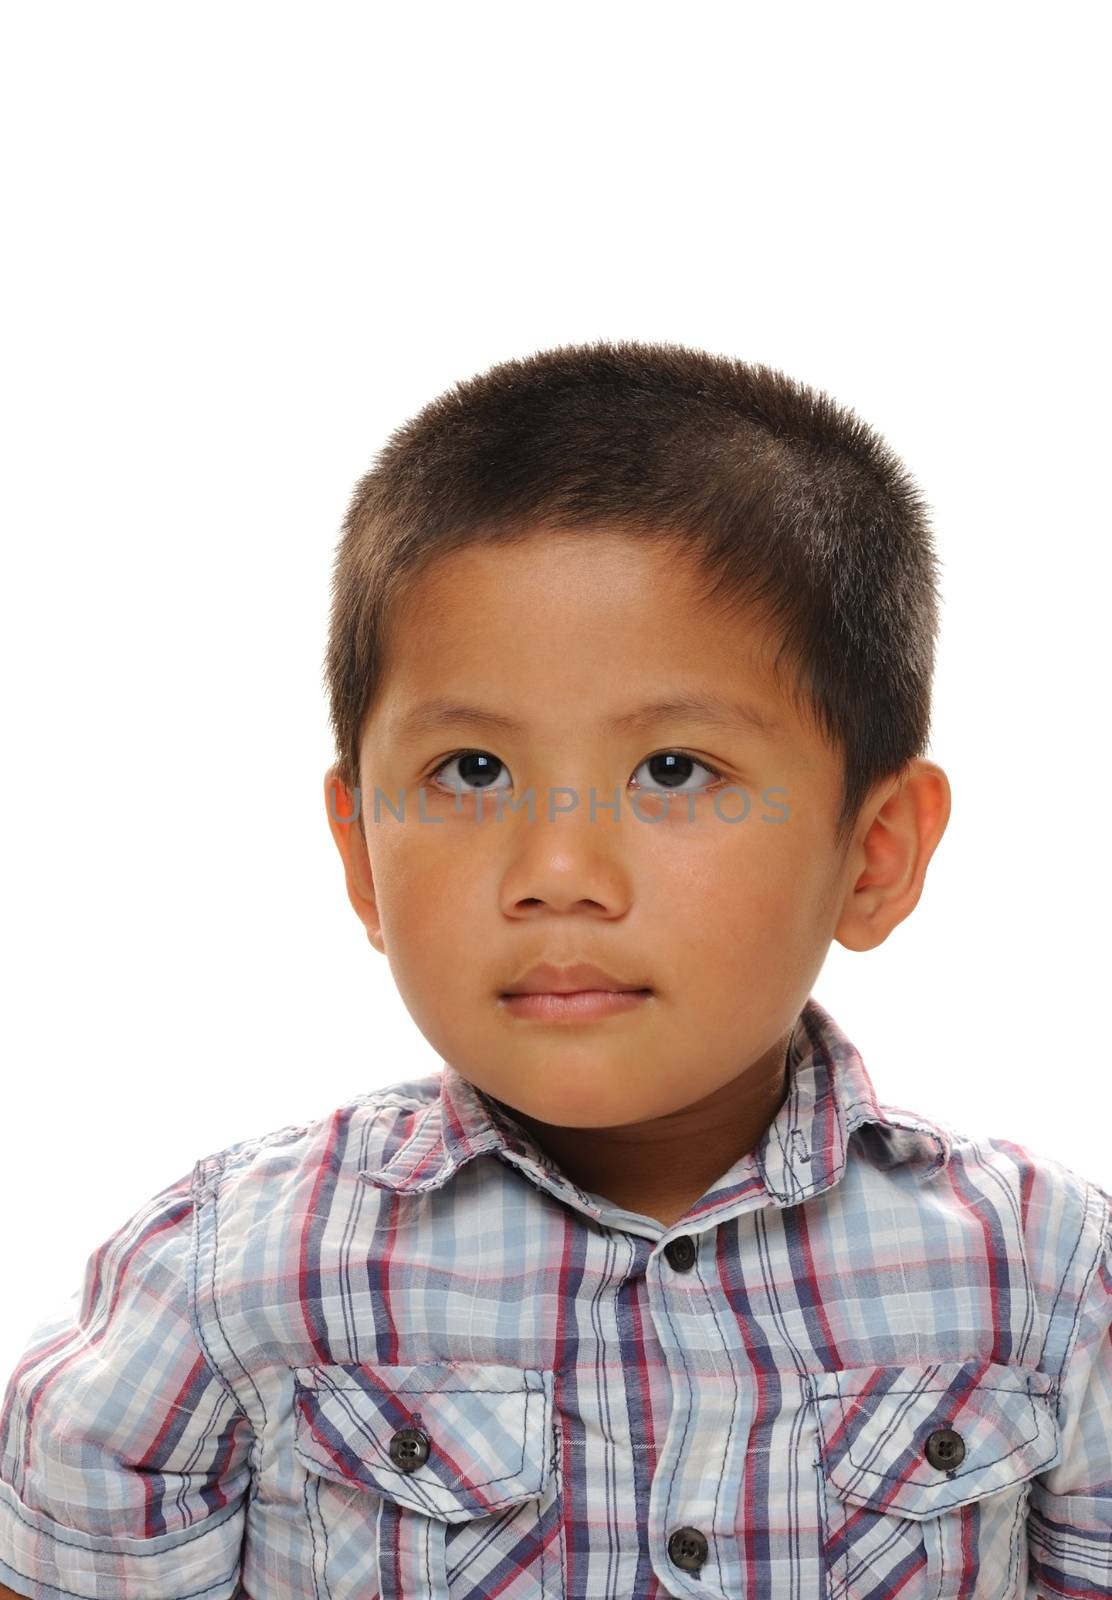 Asian boy wearing fashionable shirt with white background